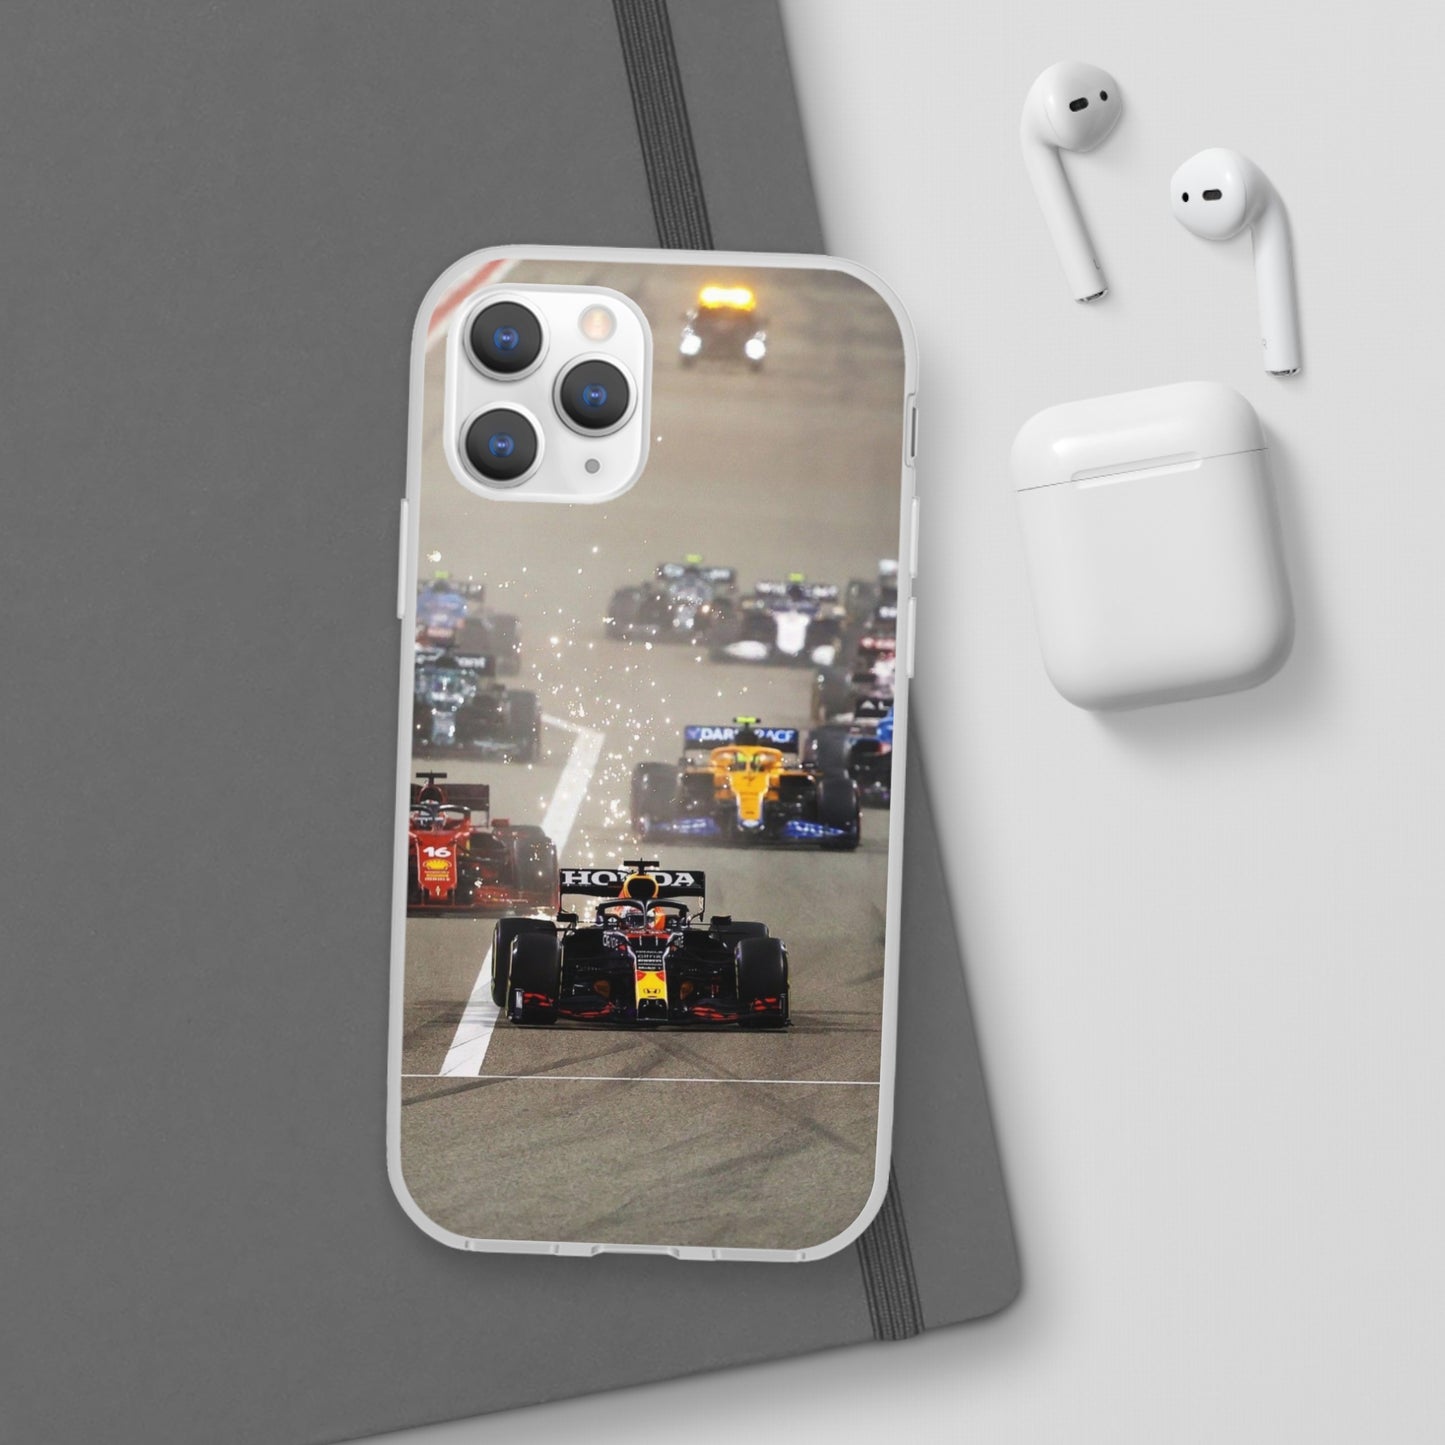 F1 Race Phone Case